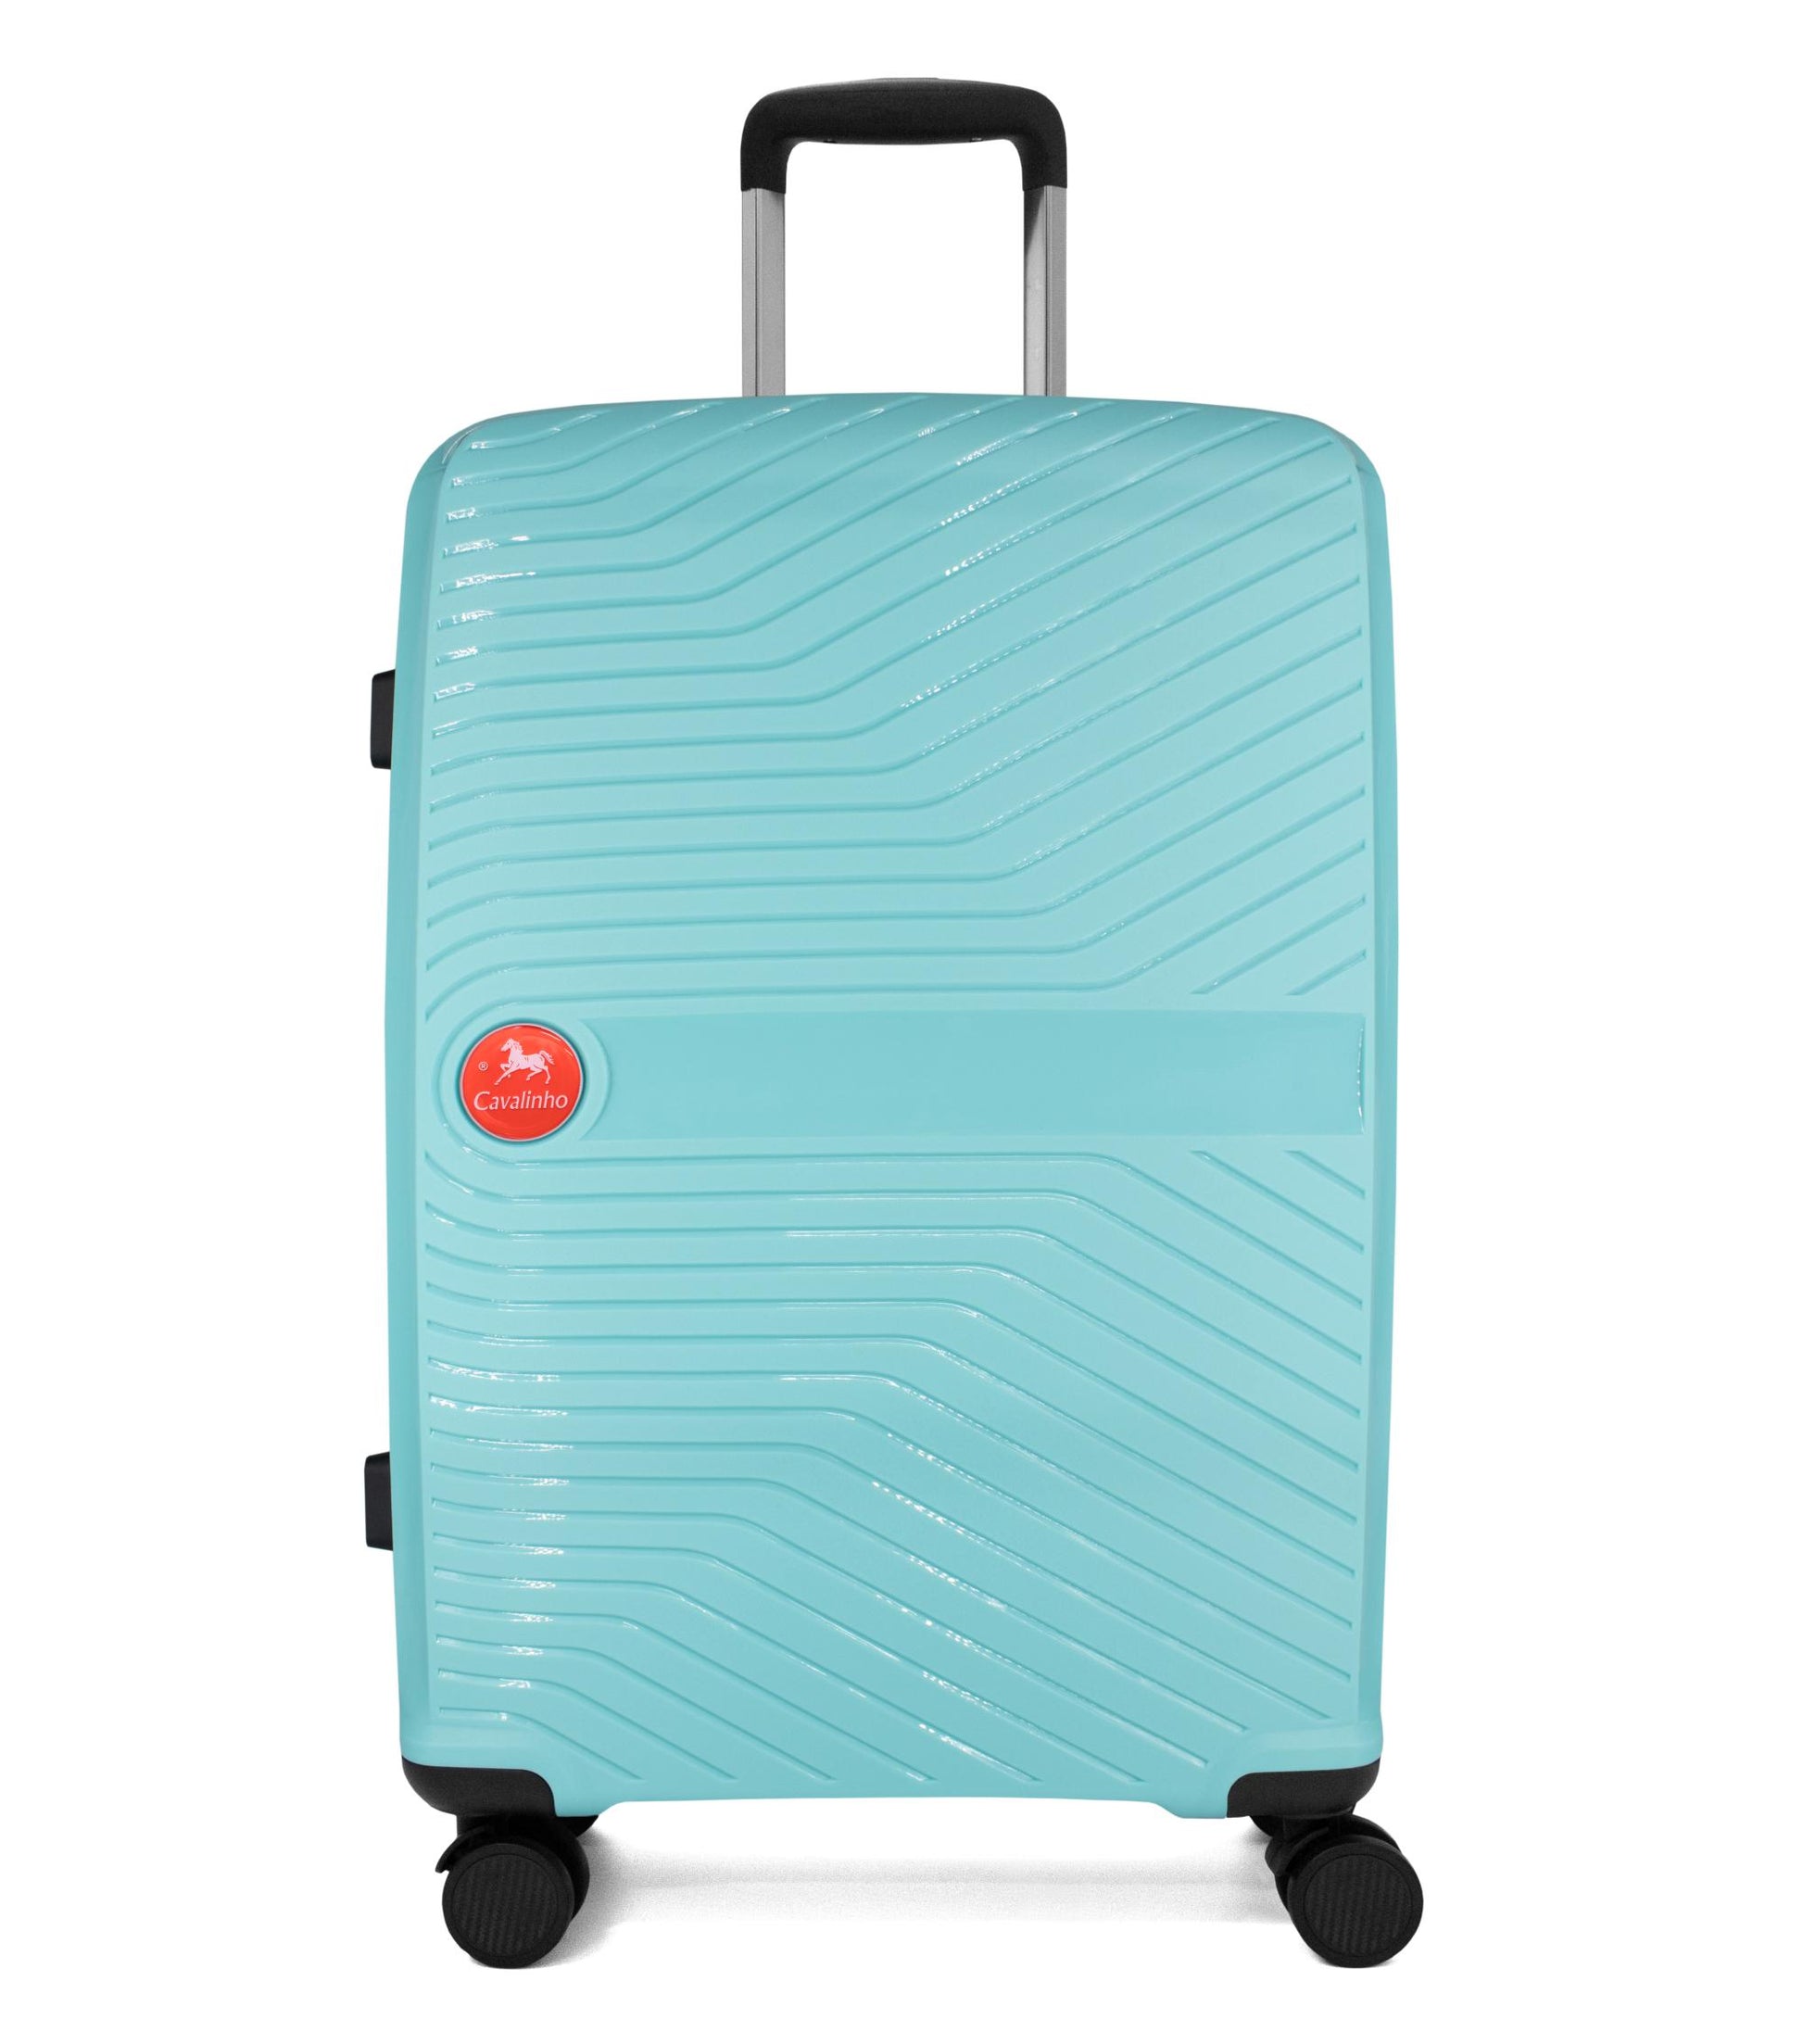 Cavalinho Colorful Check-in Hardside Luggage (24") - 24 inch LightBlue - 68020004.10.24_1